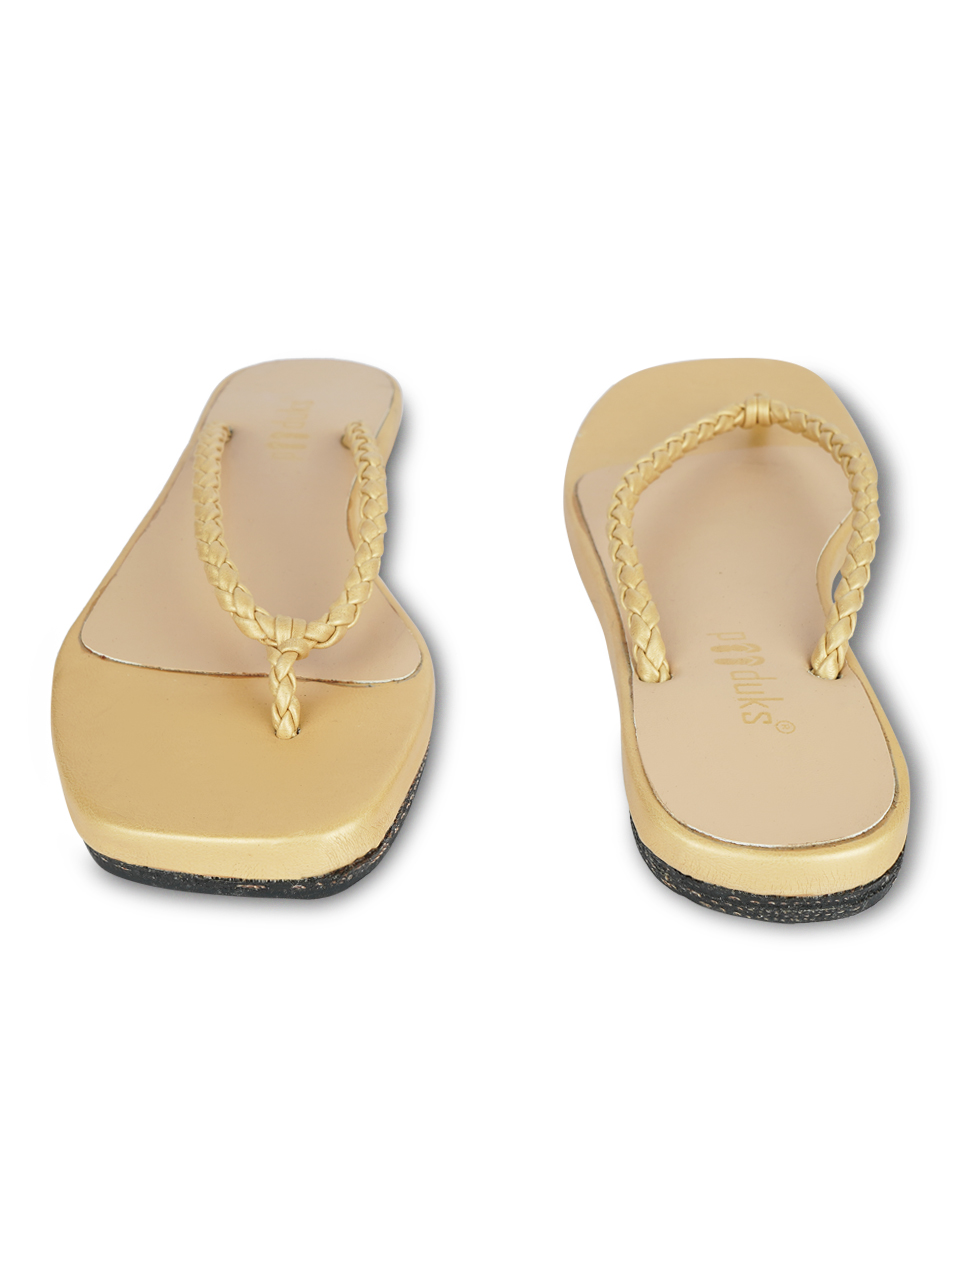 Product: Paaduks Women Nod – Gold Flats